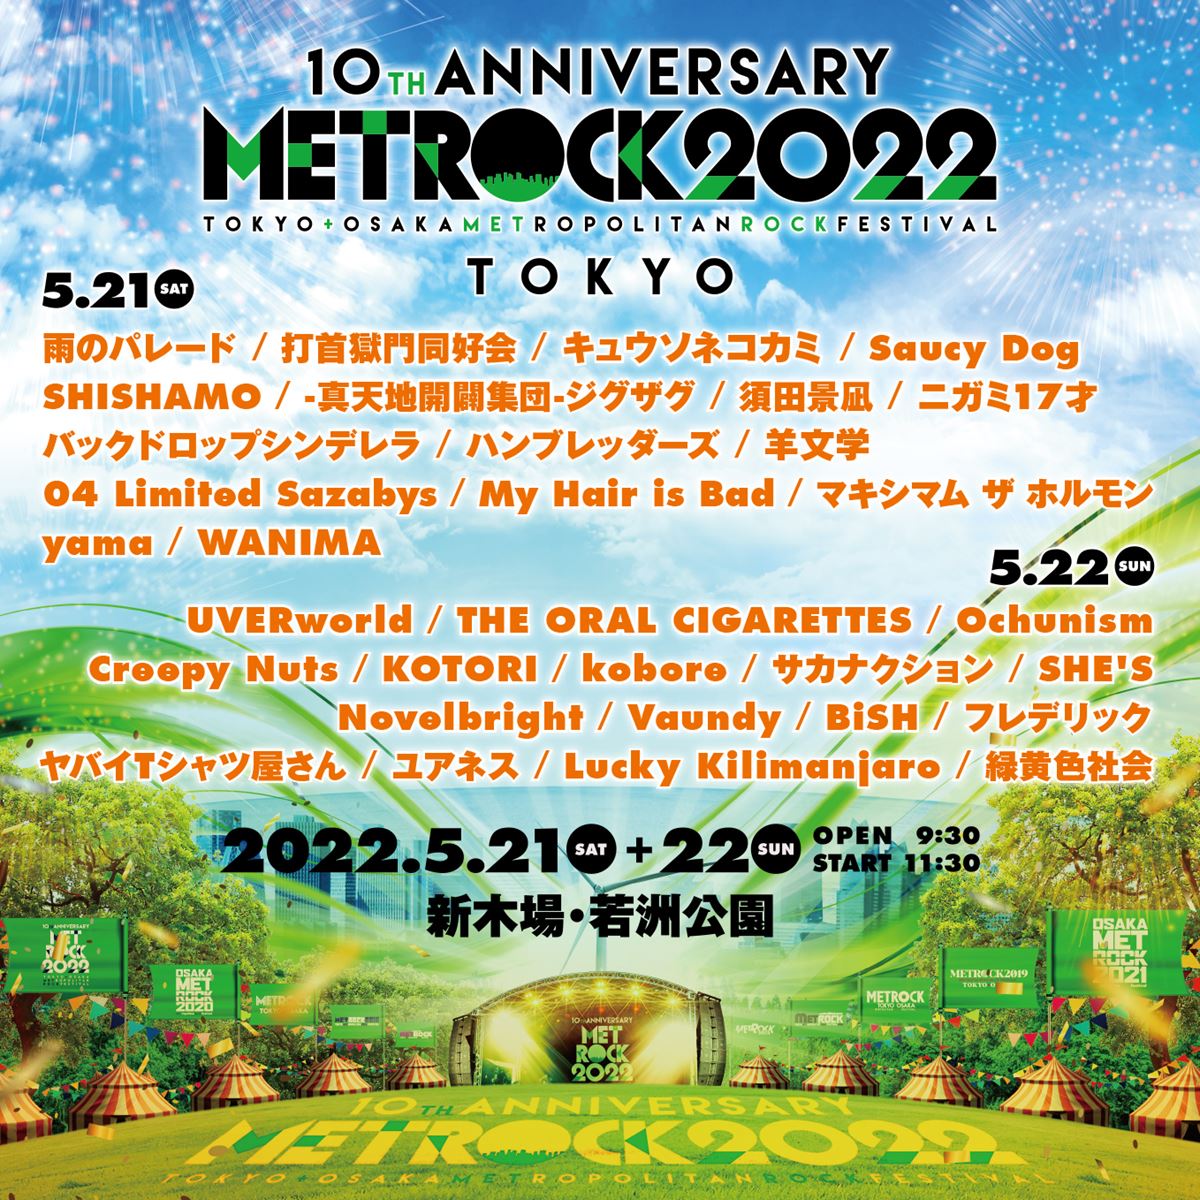 『TOKYO METROPOLITAN ROCK FESTIVAL 2022』出演アーティスト